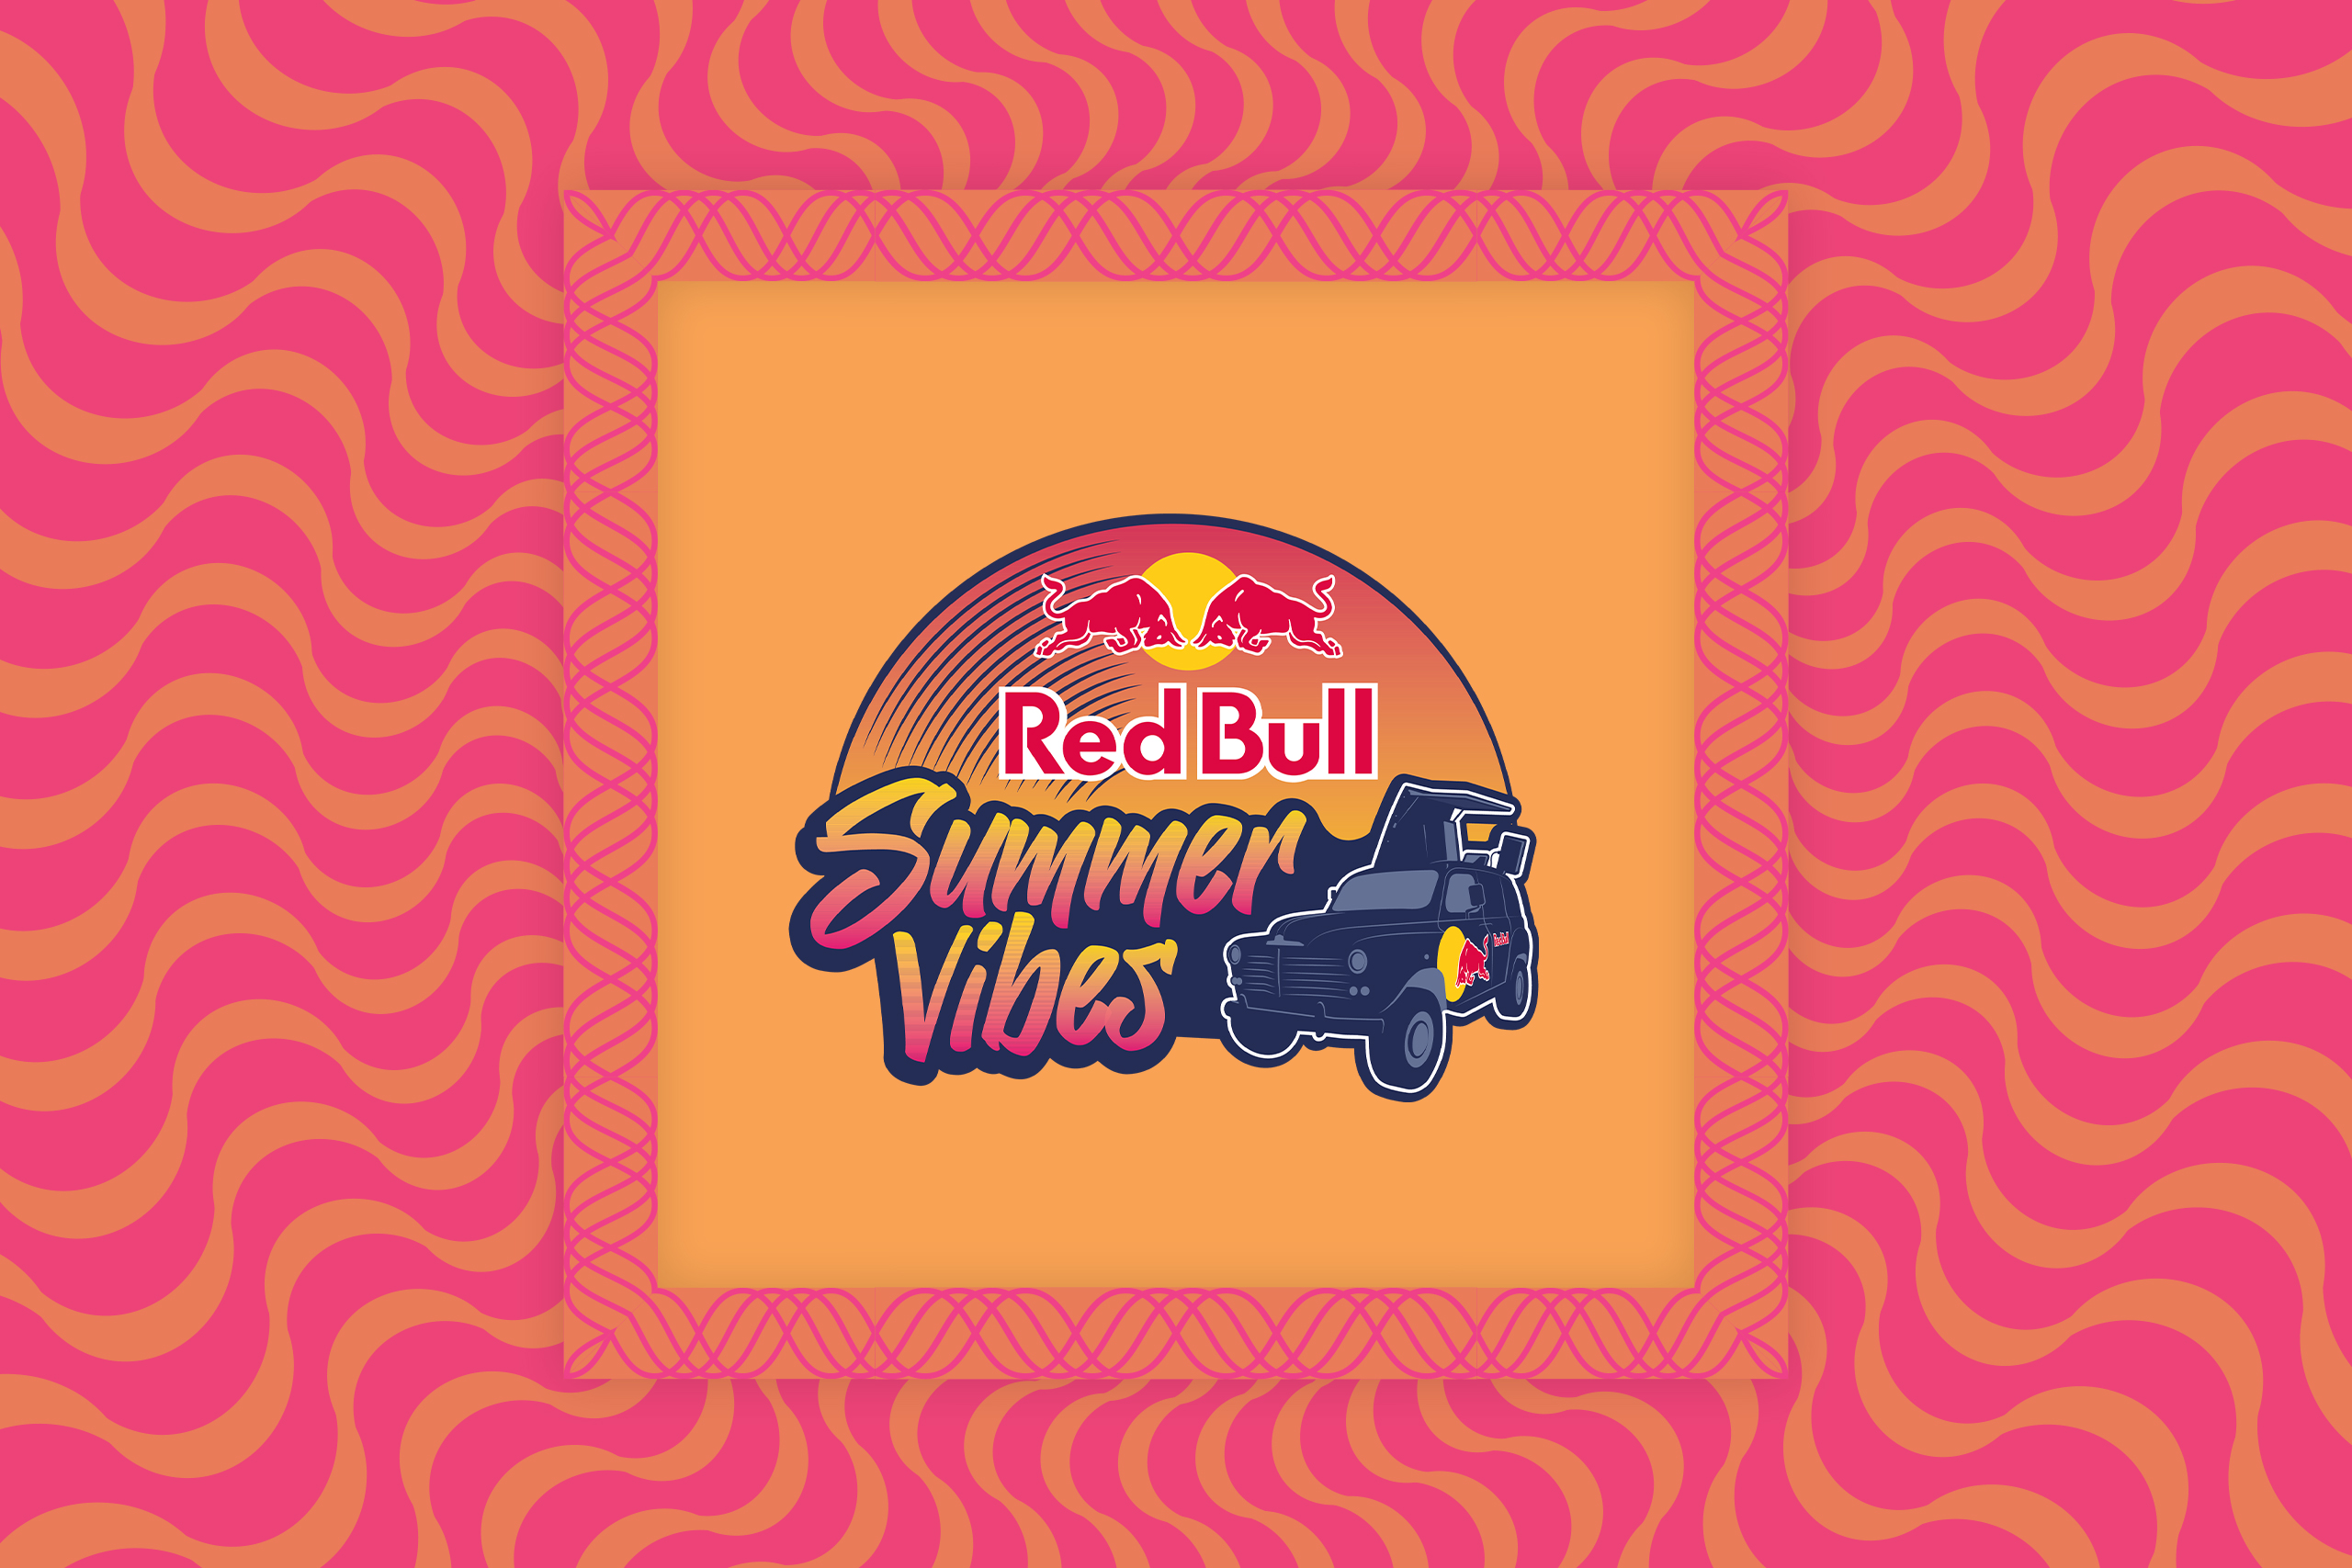 Red Bull Summer Vibes